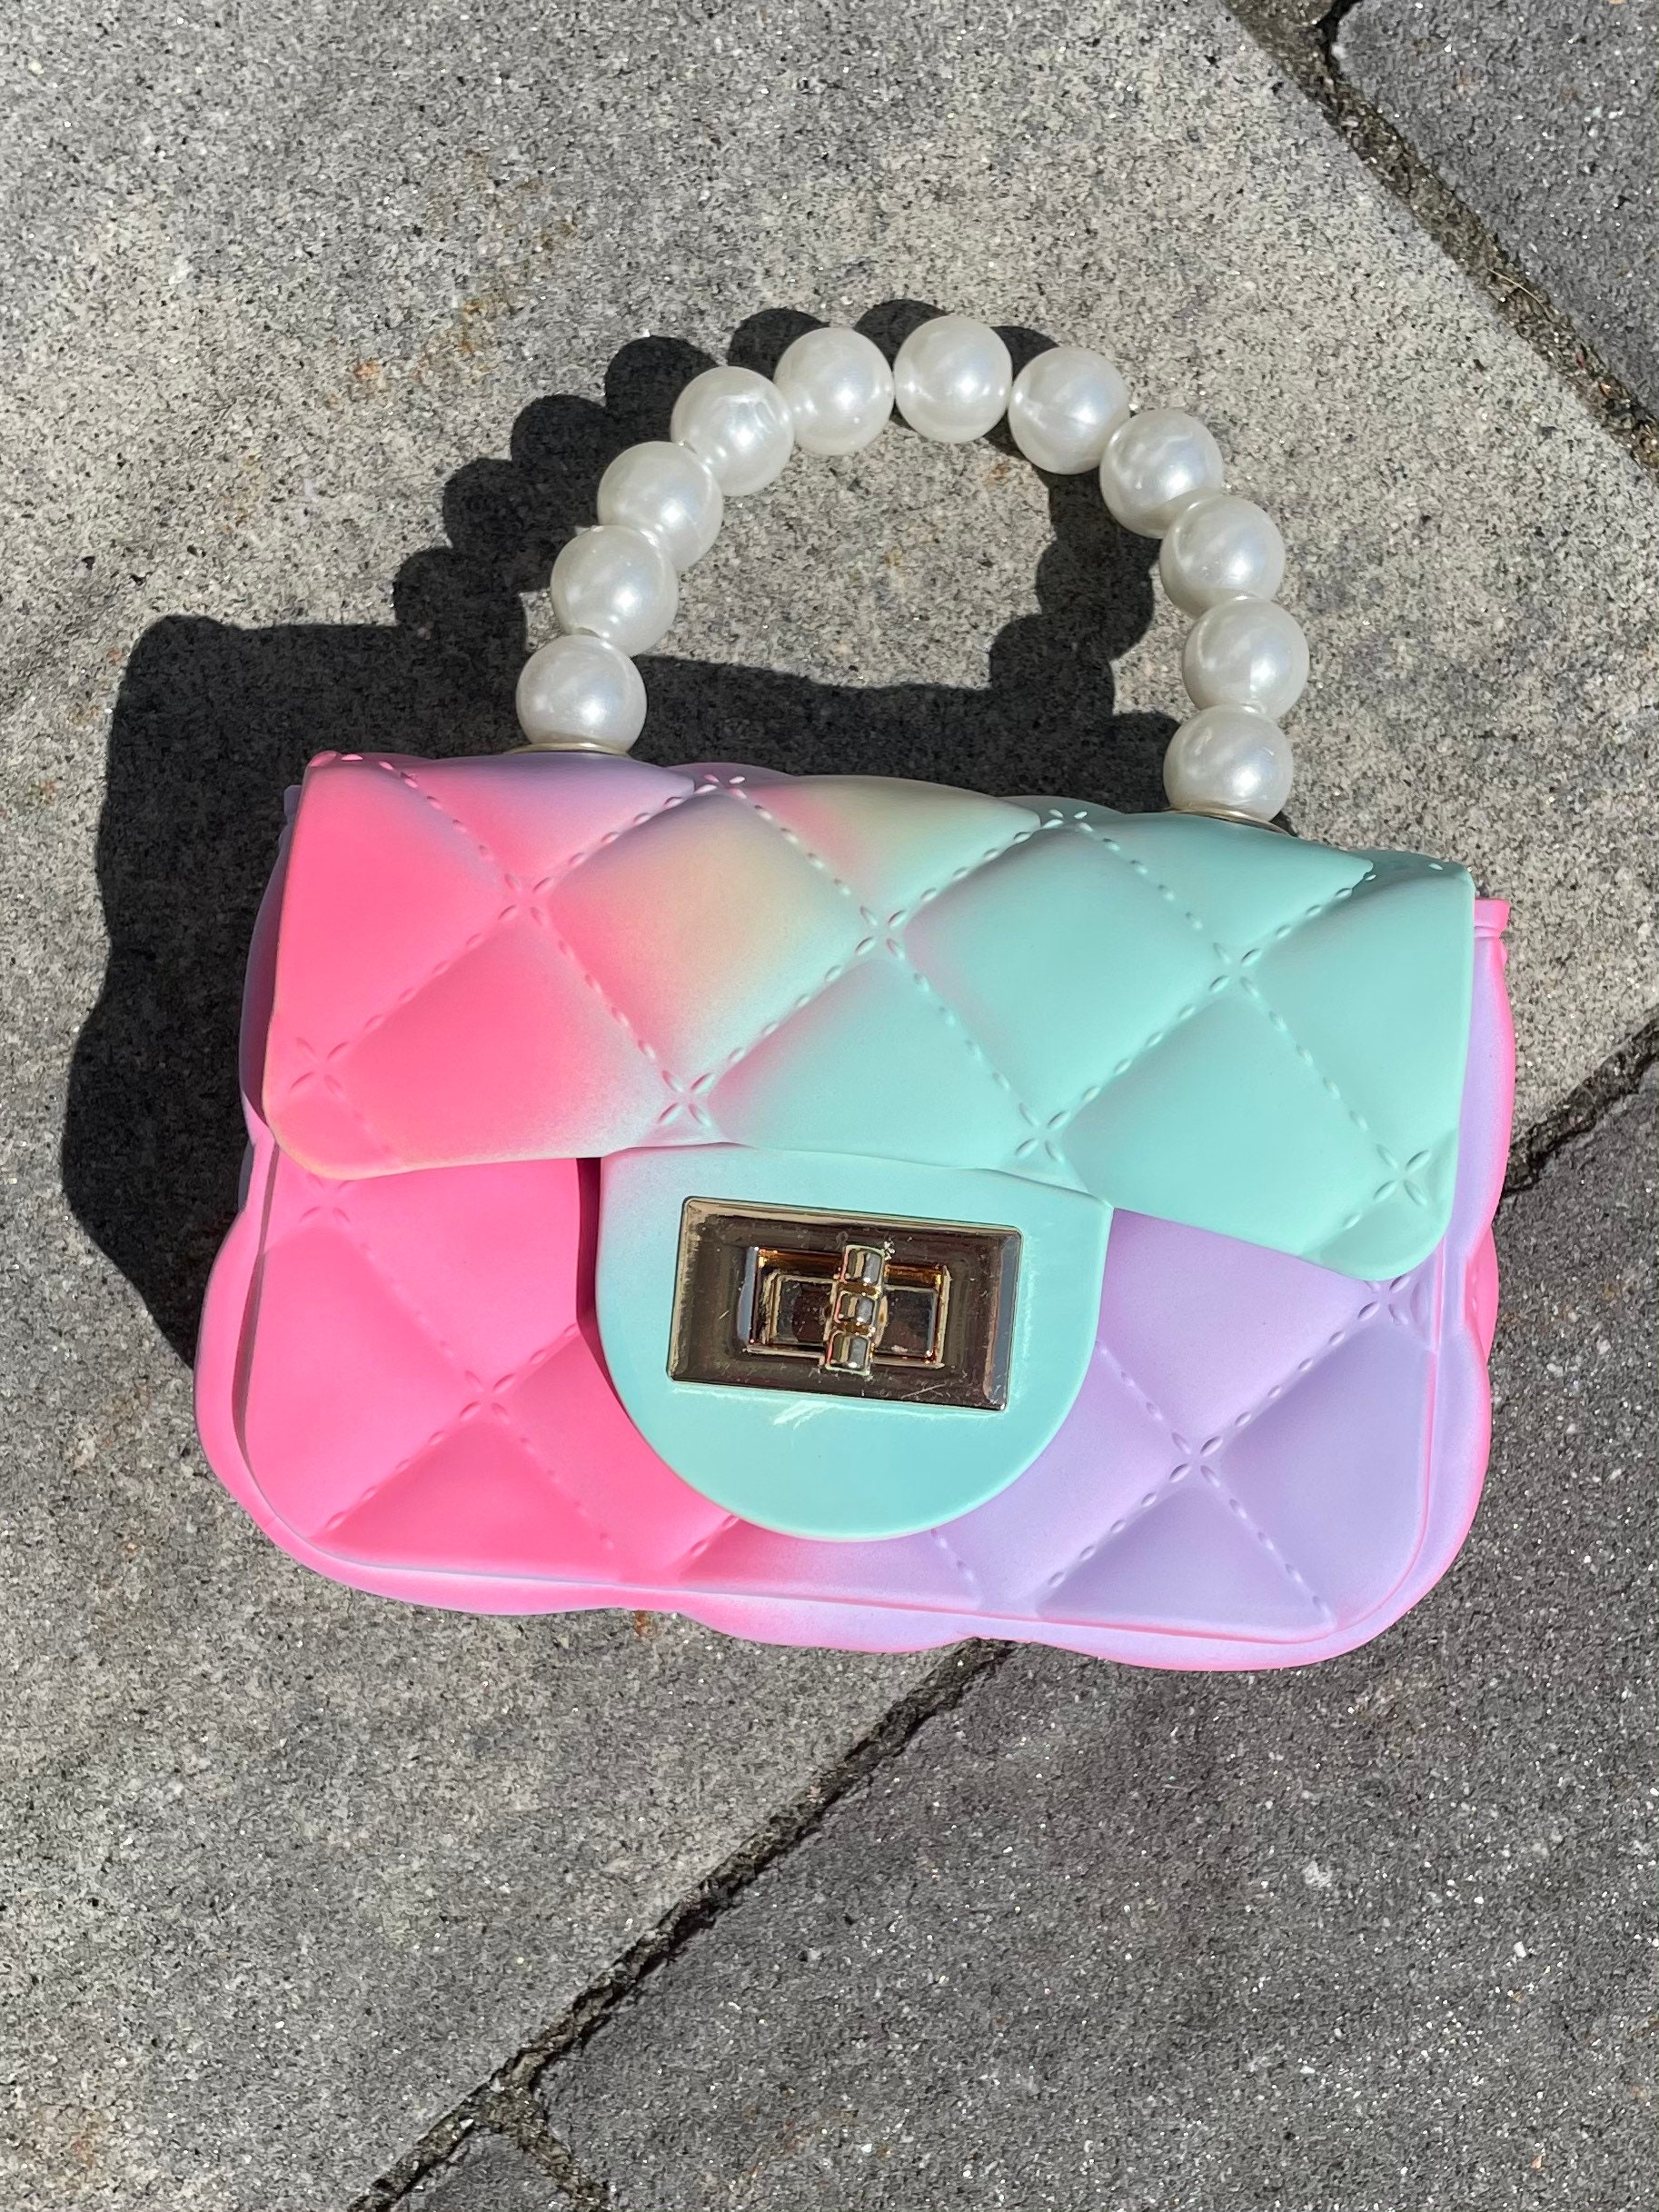 Jelly Bag Kids Mini Crossbody Bag Chain Bag - China Luxury Women Bag and  Fashion Lady Bag price